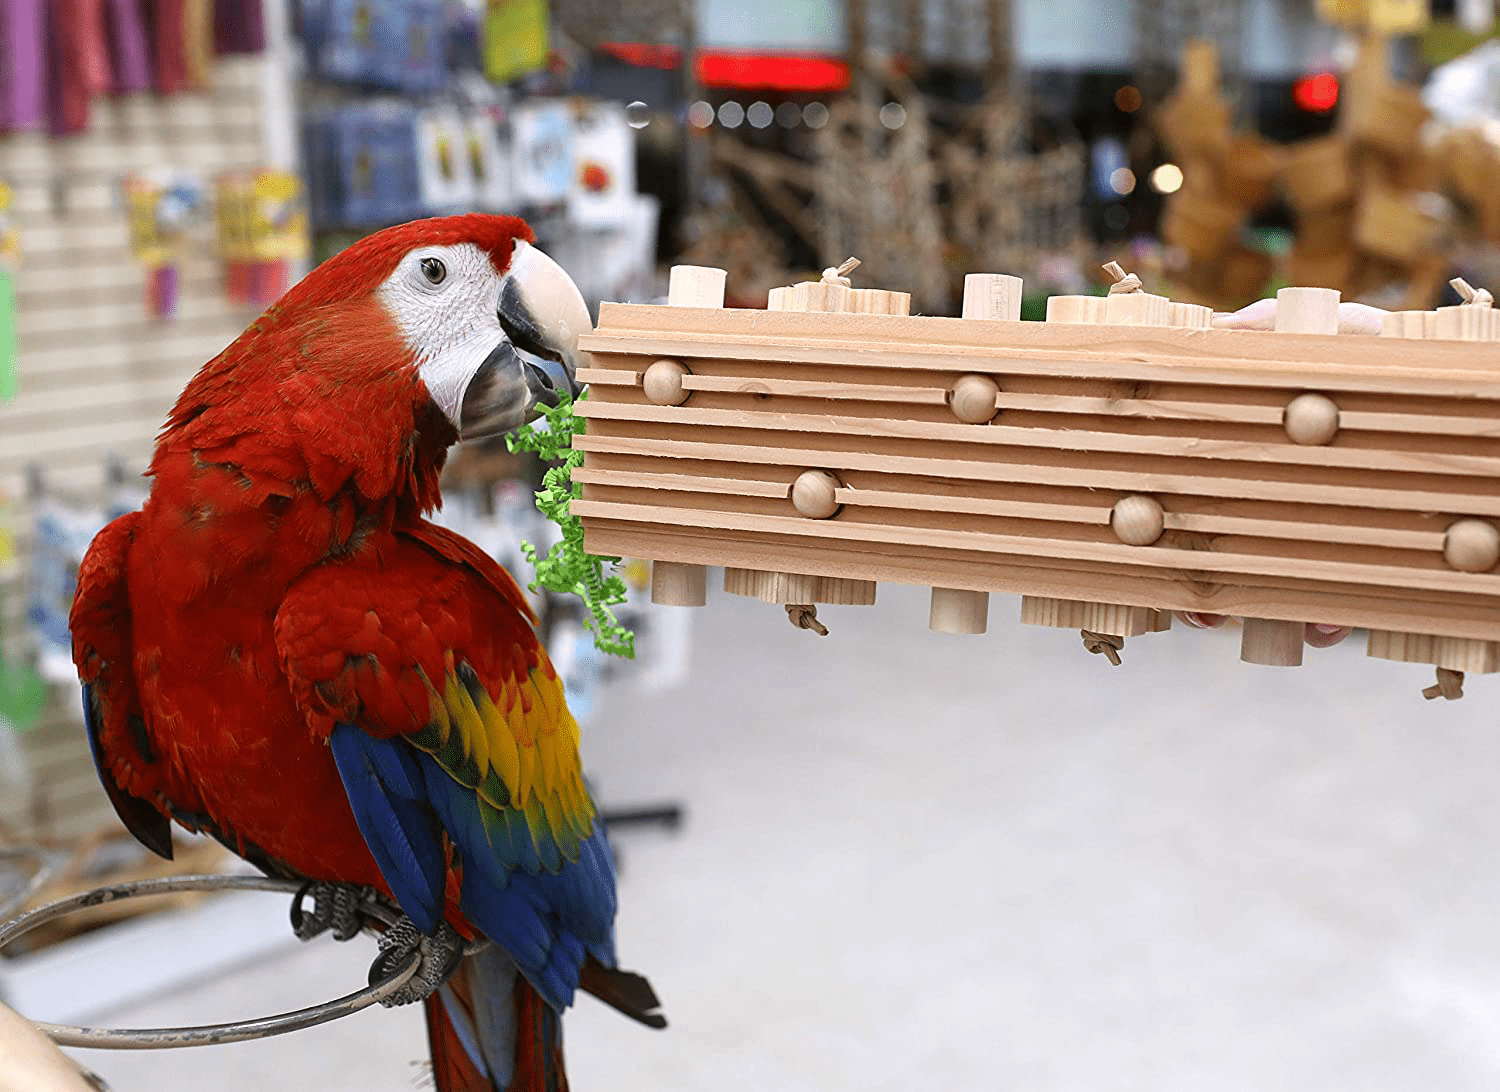 Activity Block - Large Parrot Toy Animals & Pet Supplies > Pet Supplies > Bird Supplies > Bird Toys Parrot Wizard   